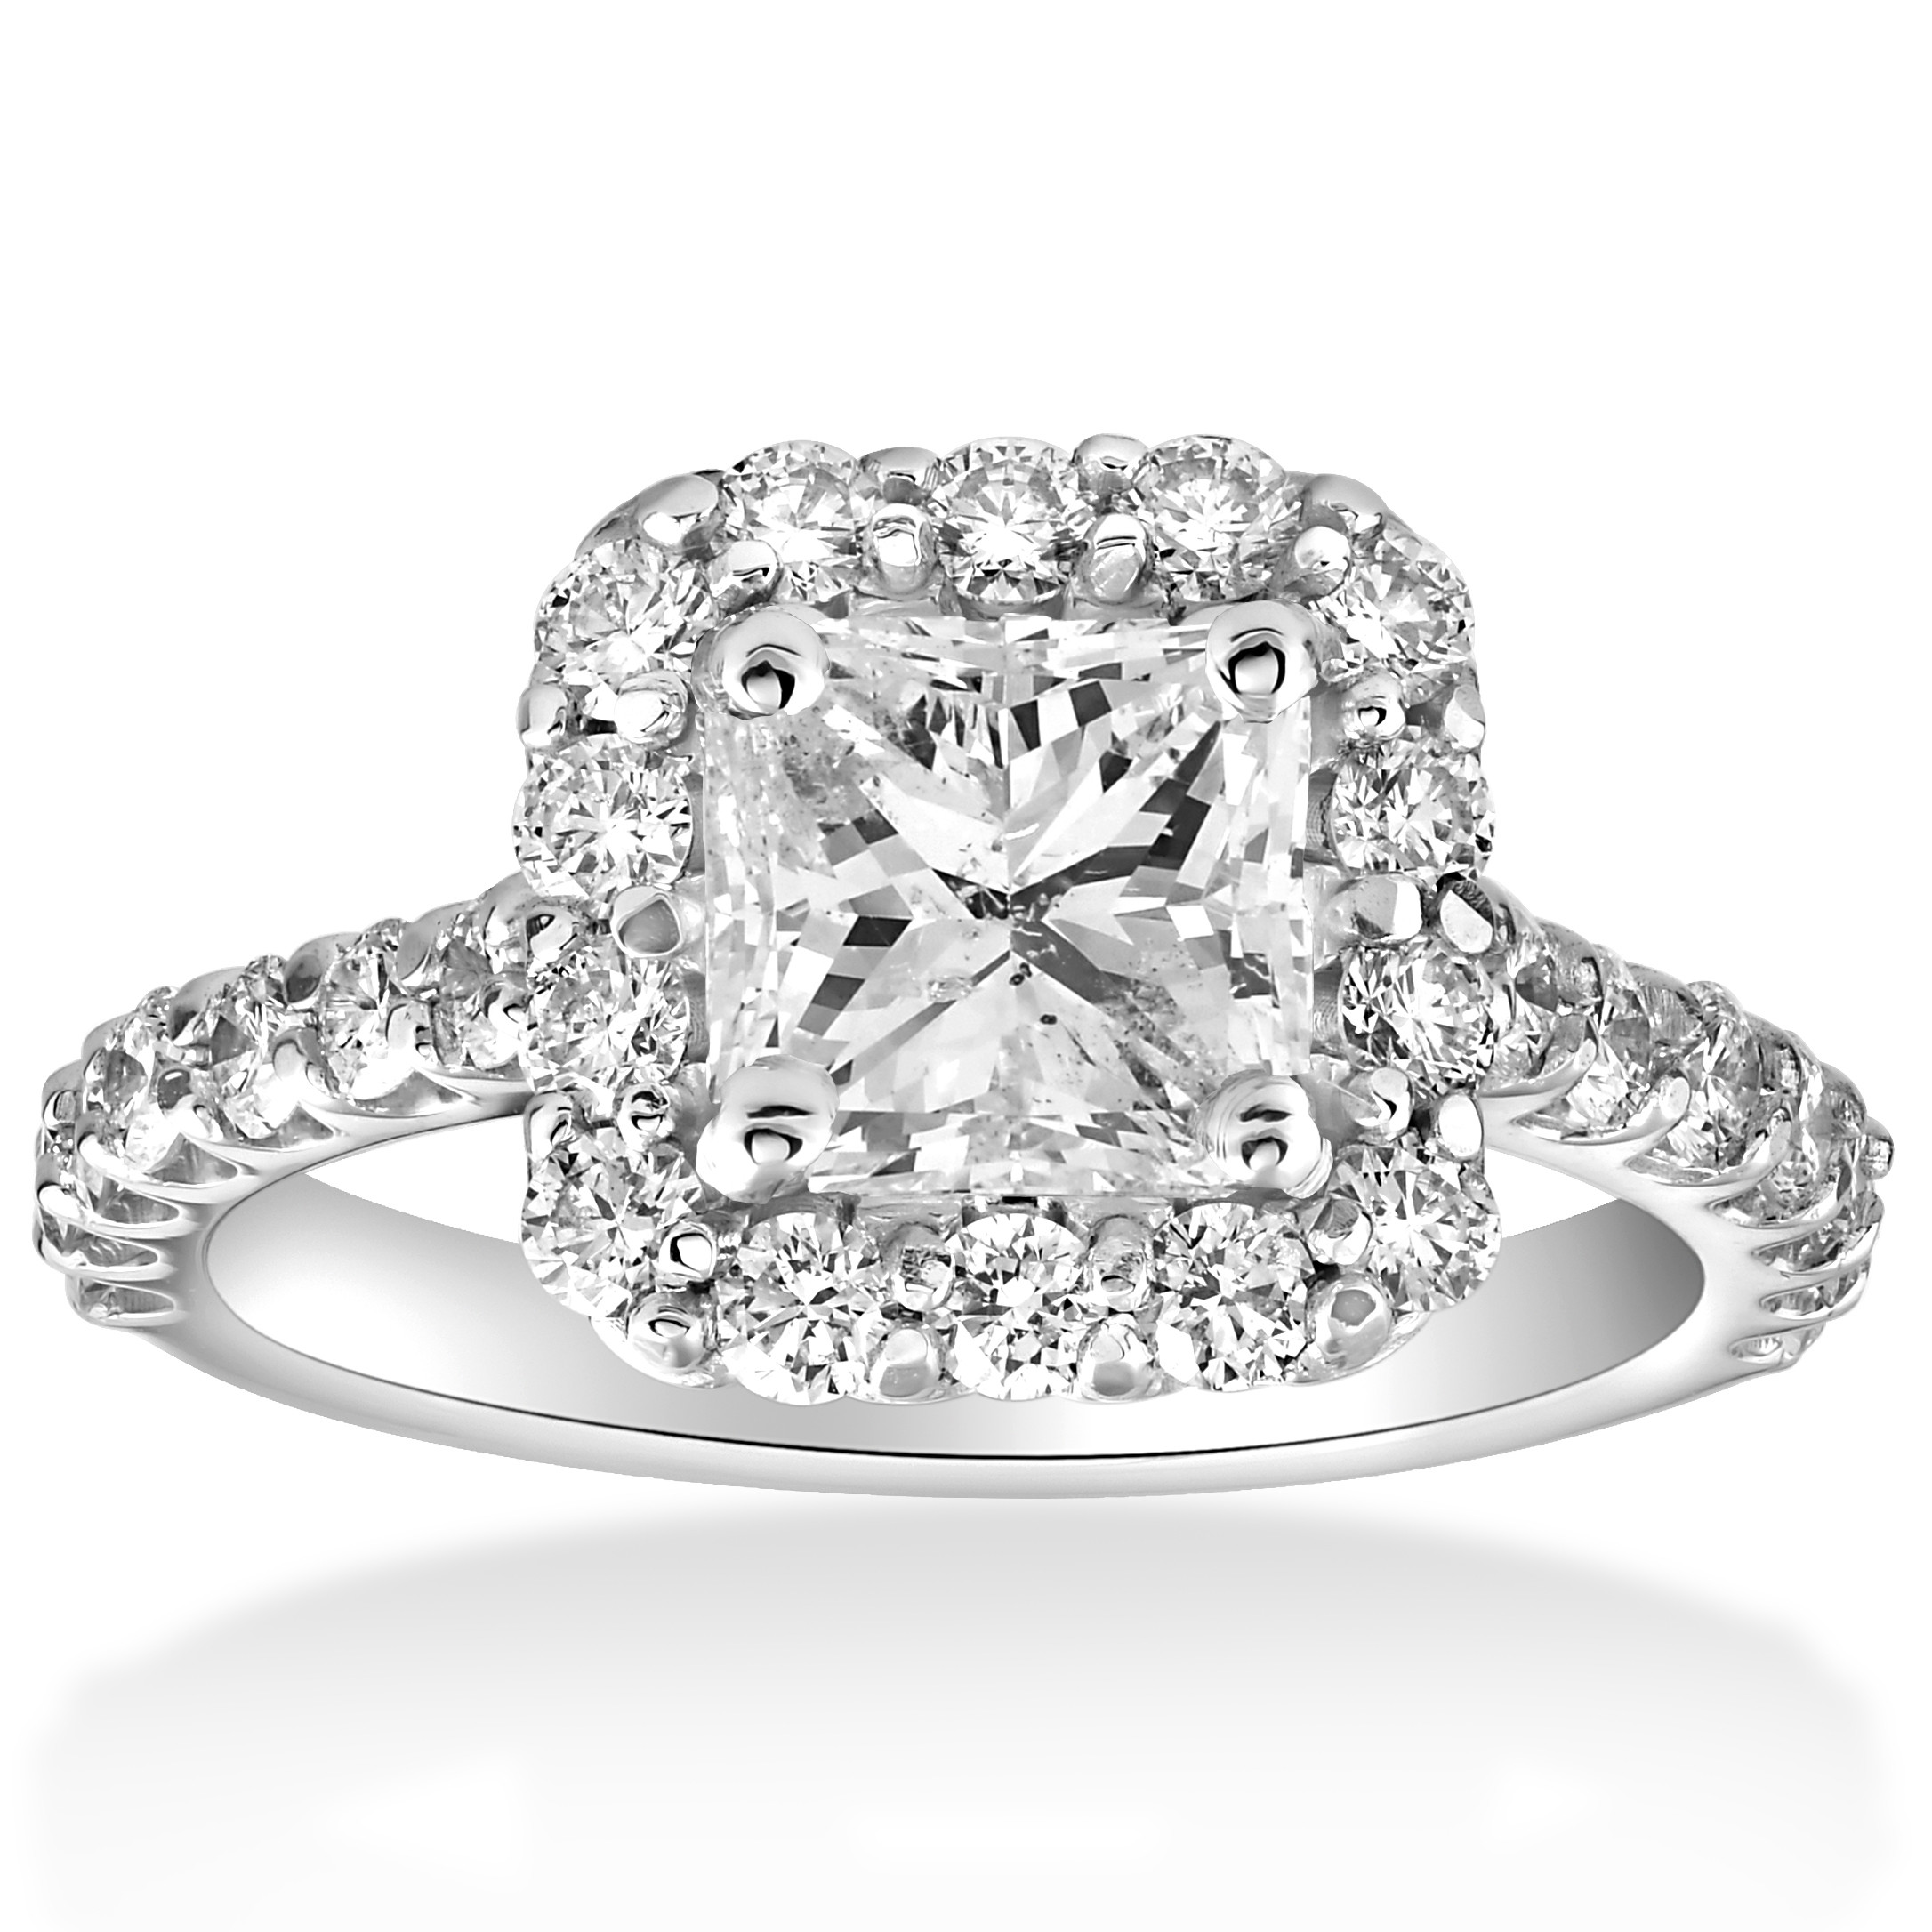 Halo Princess Cut Engagement Rings
 2 cttw Halo Princess Cut Solitaire Diamond Engagement Ring